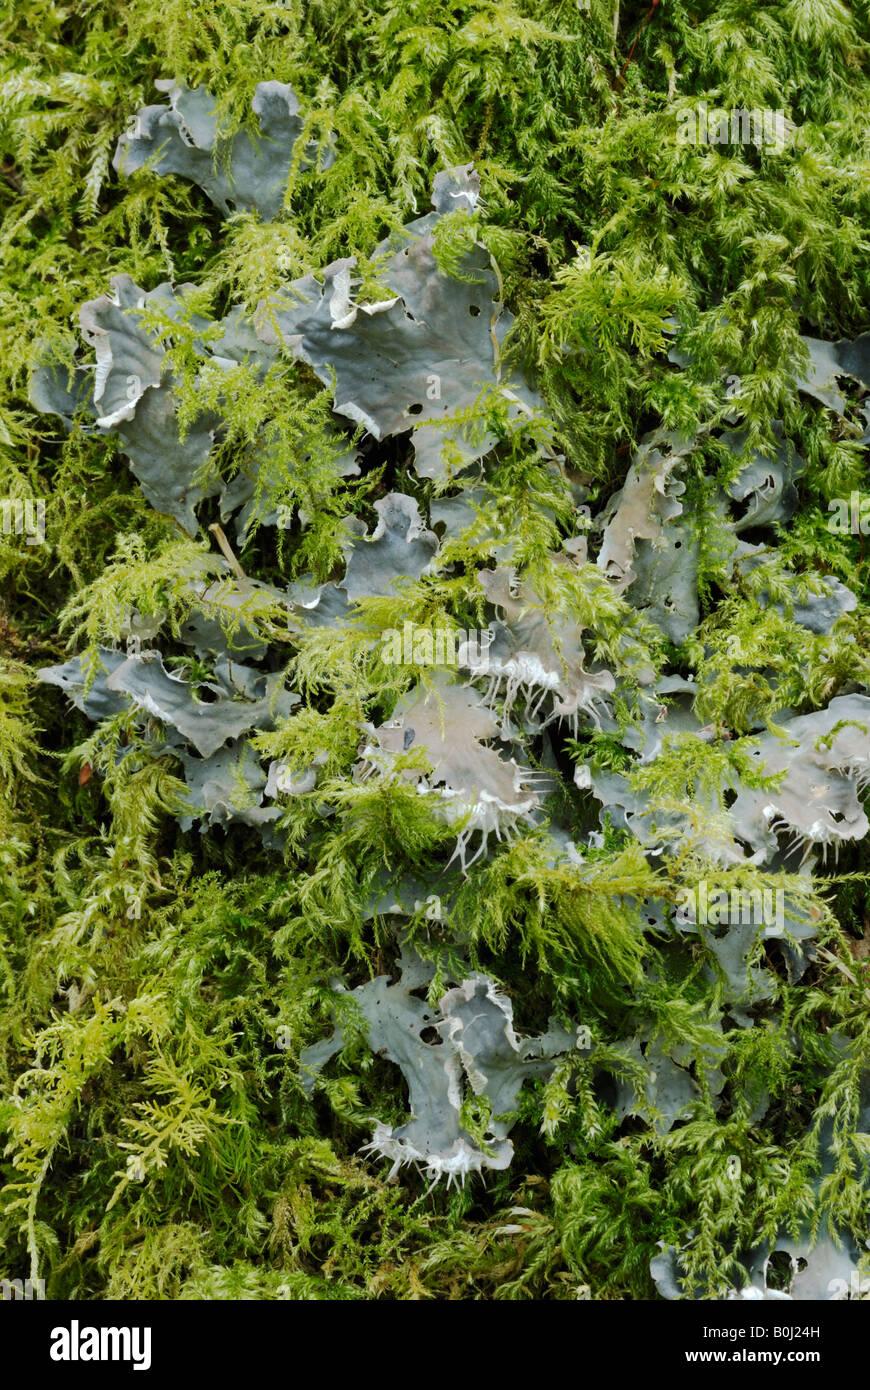 peltigera-canina-dog-lichen-and-moss-neckera-complanata-in-winter-B0J24H.jpg